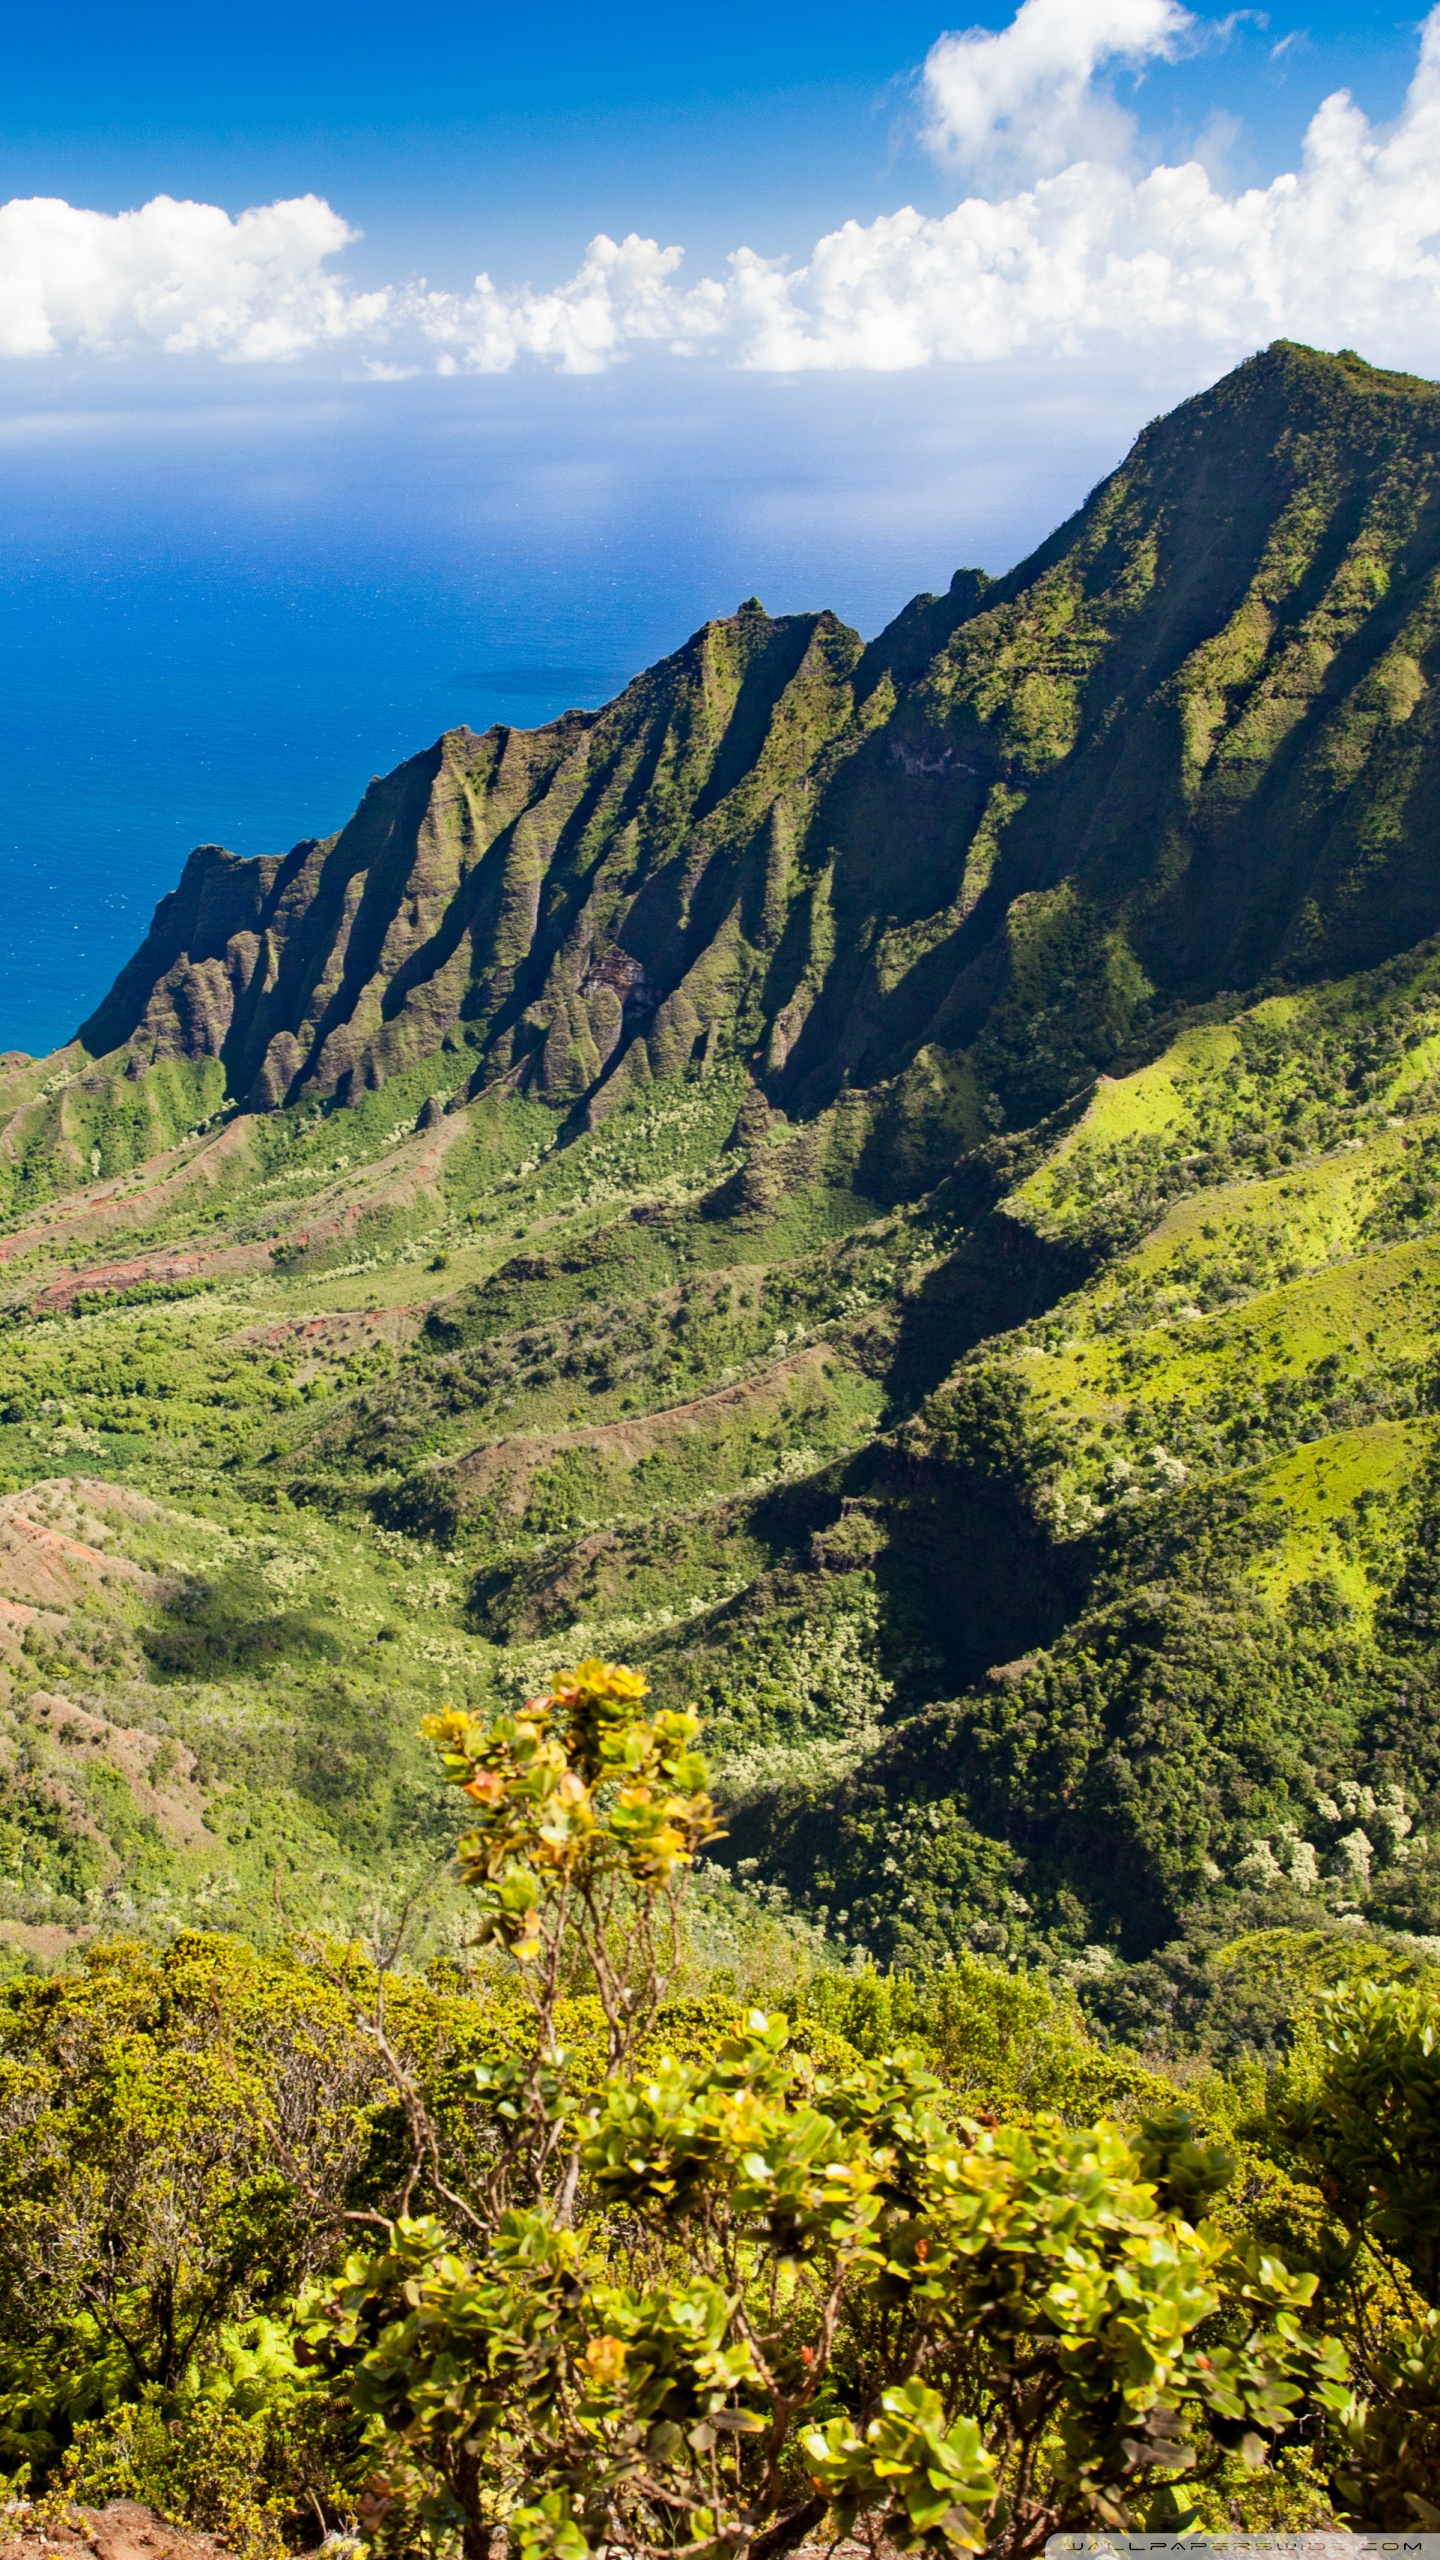 Download 21 jurassic-background Kauai-Jurassic-Park-Na-Pali-Kalalau-Lookout-Hawaii-.jpg